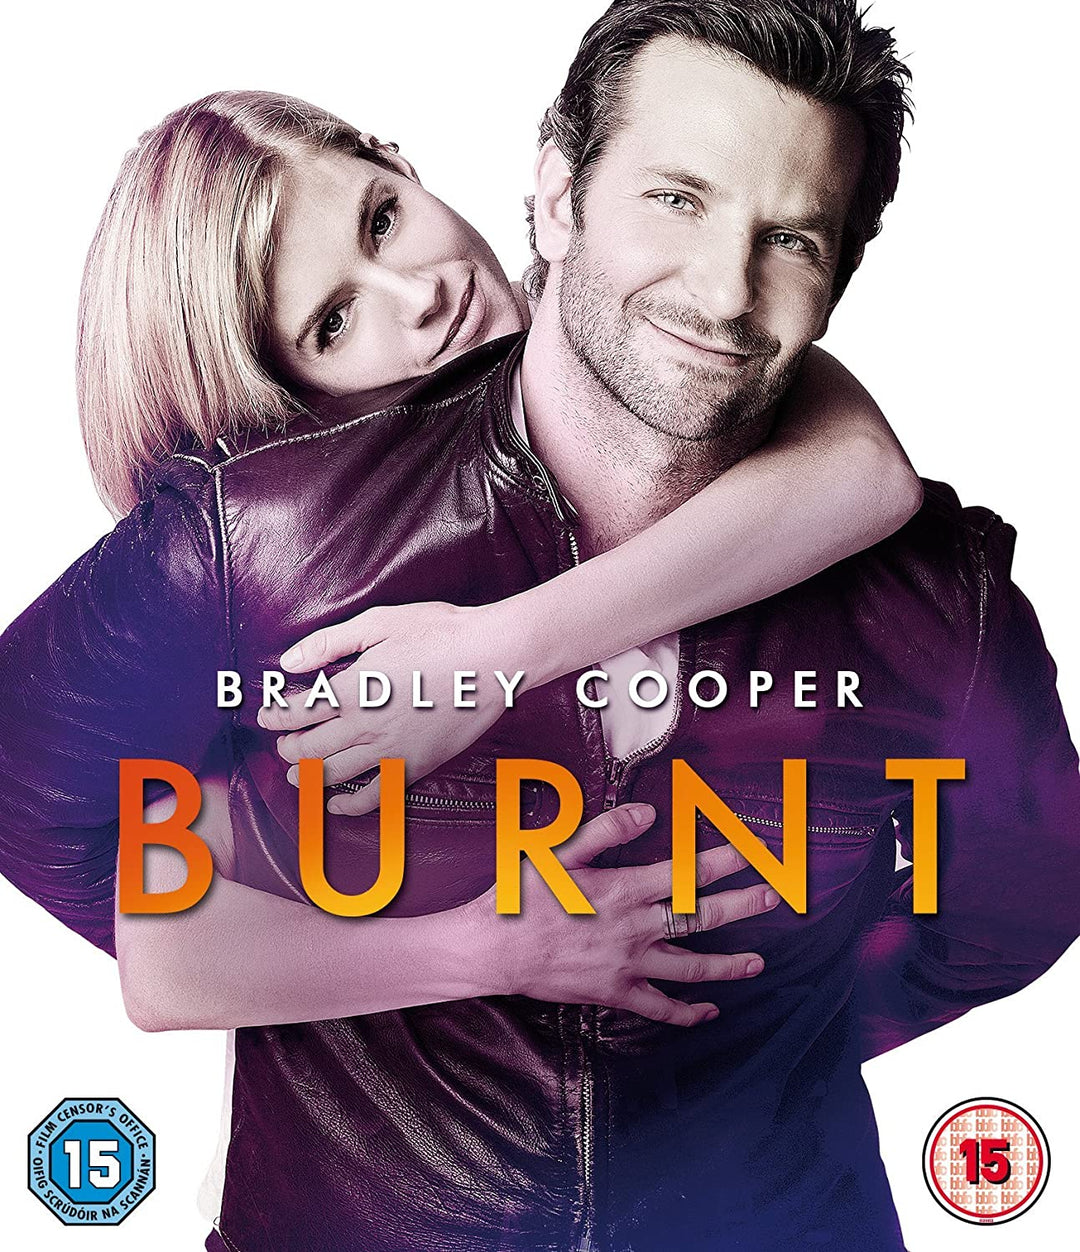 Burnt [2017] - Drama/Comedy [DVD]